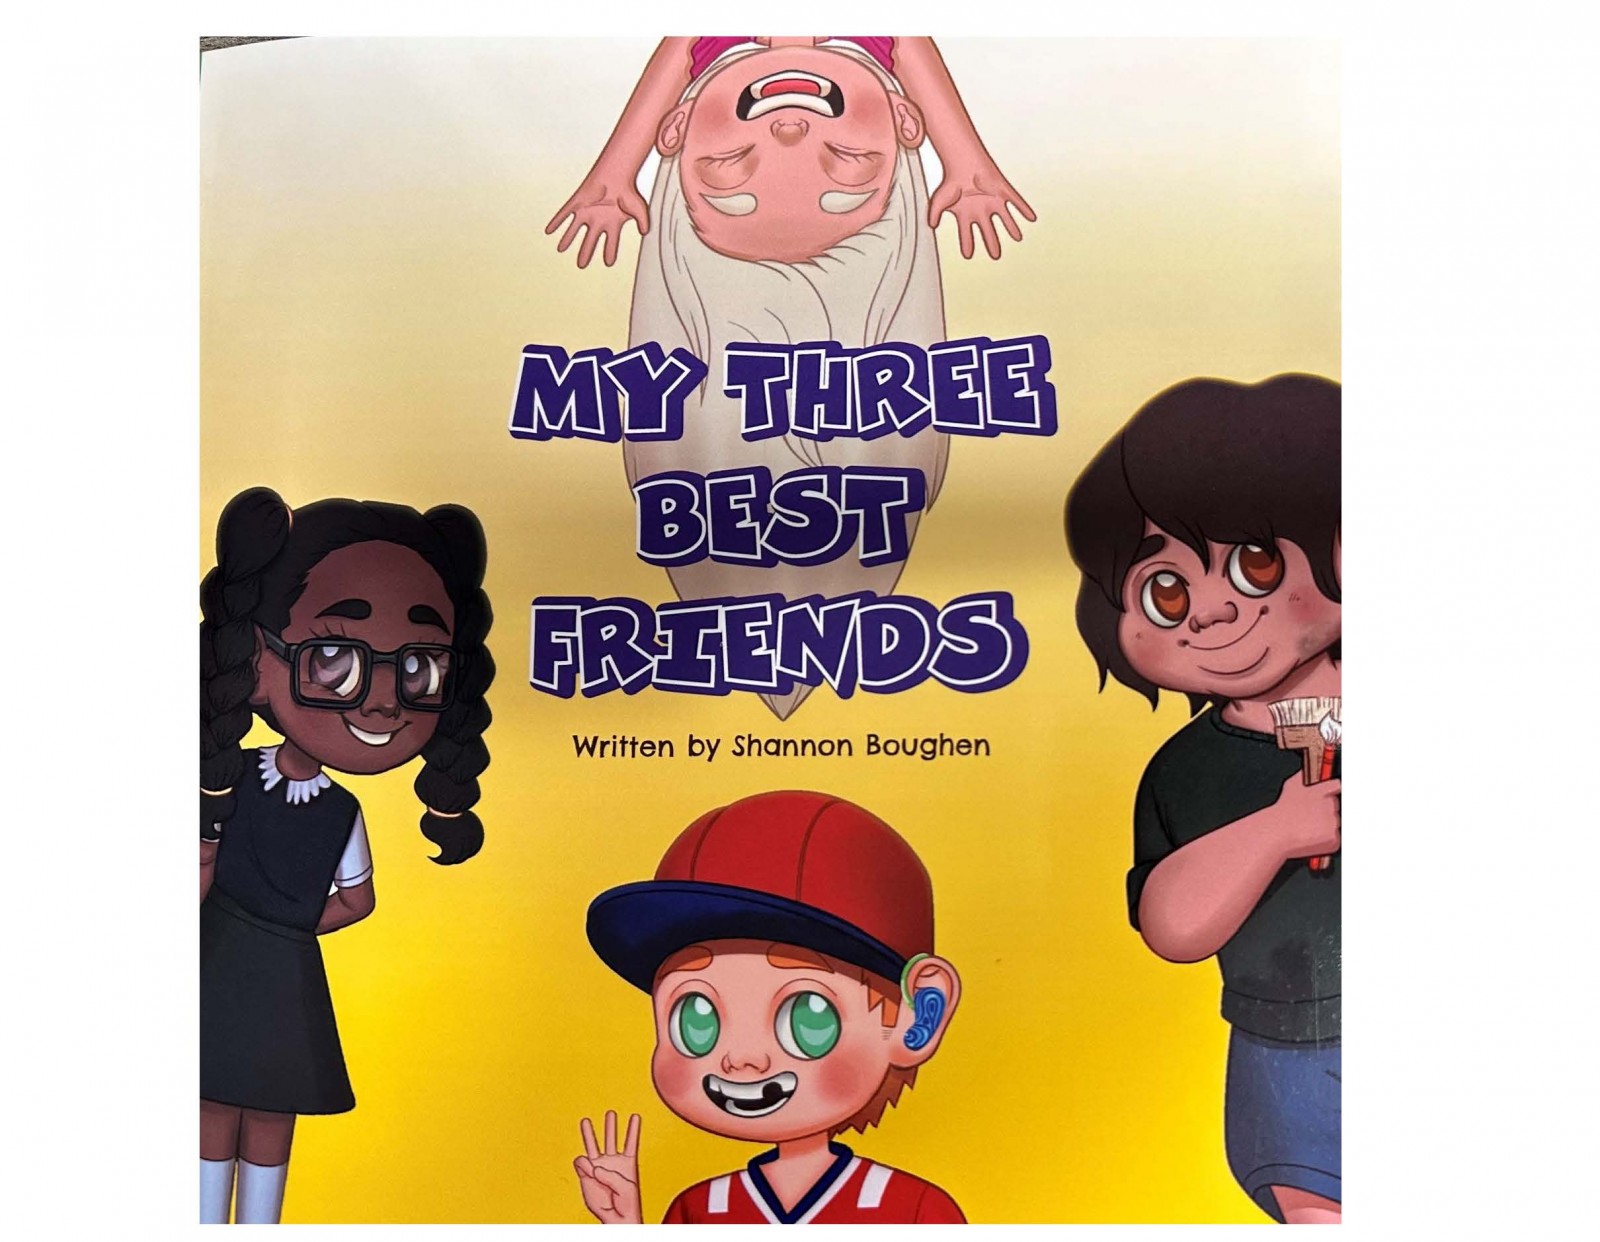 Photo of My Three Best Friends book.